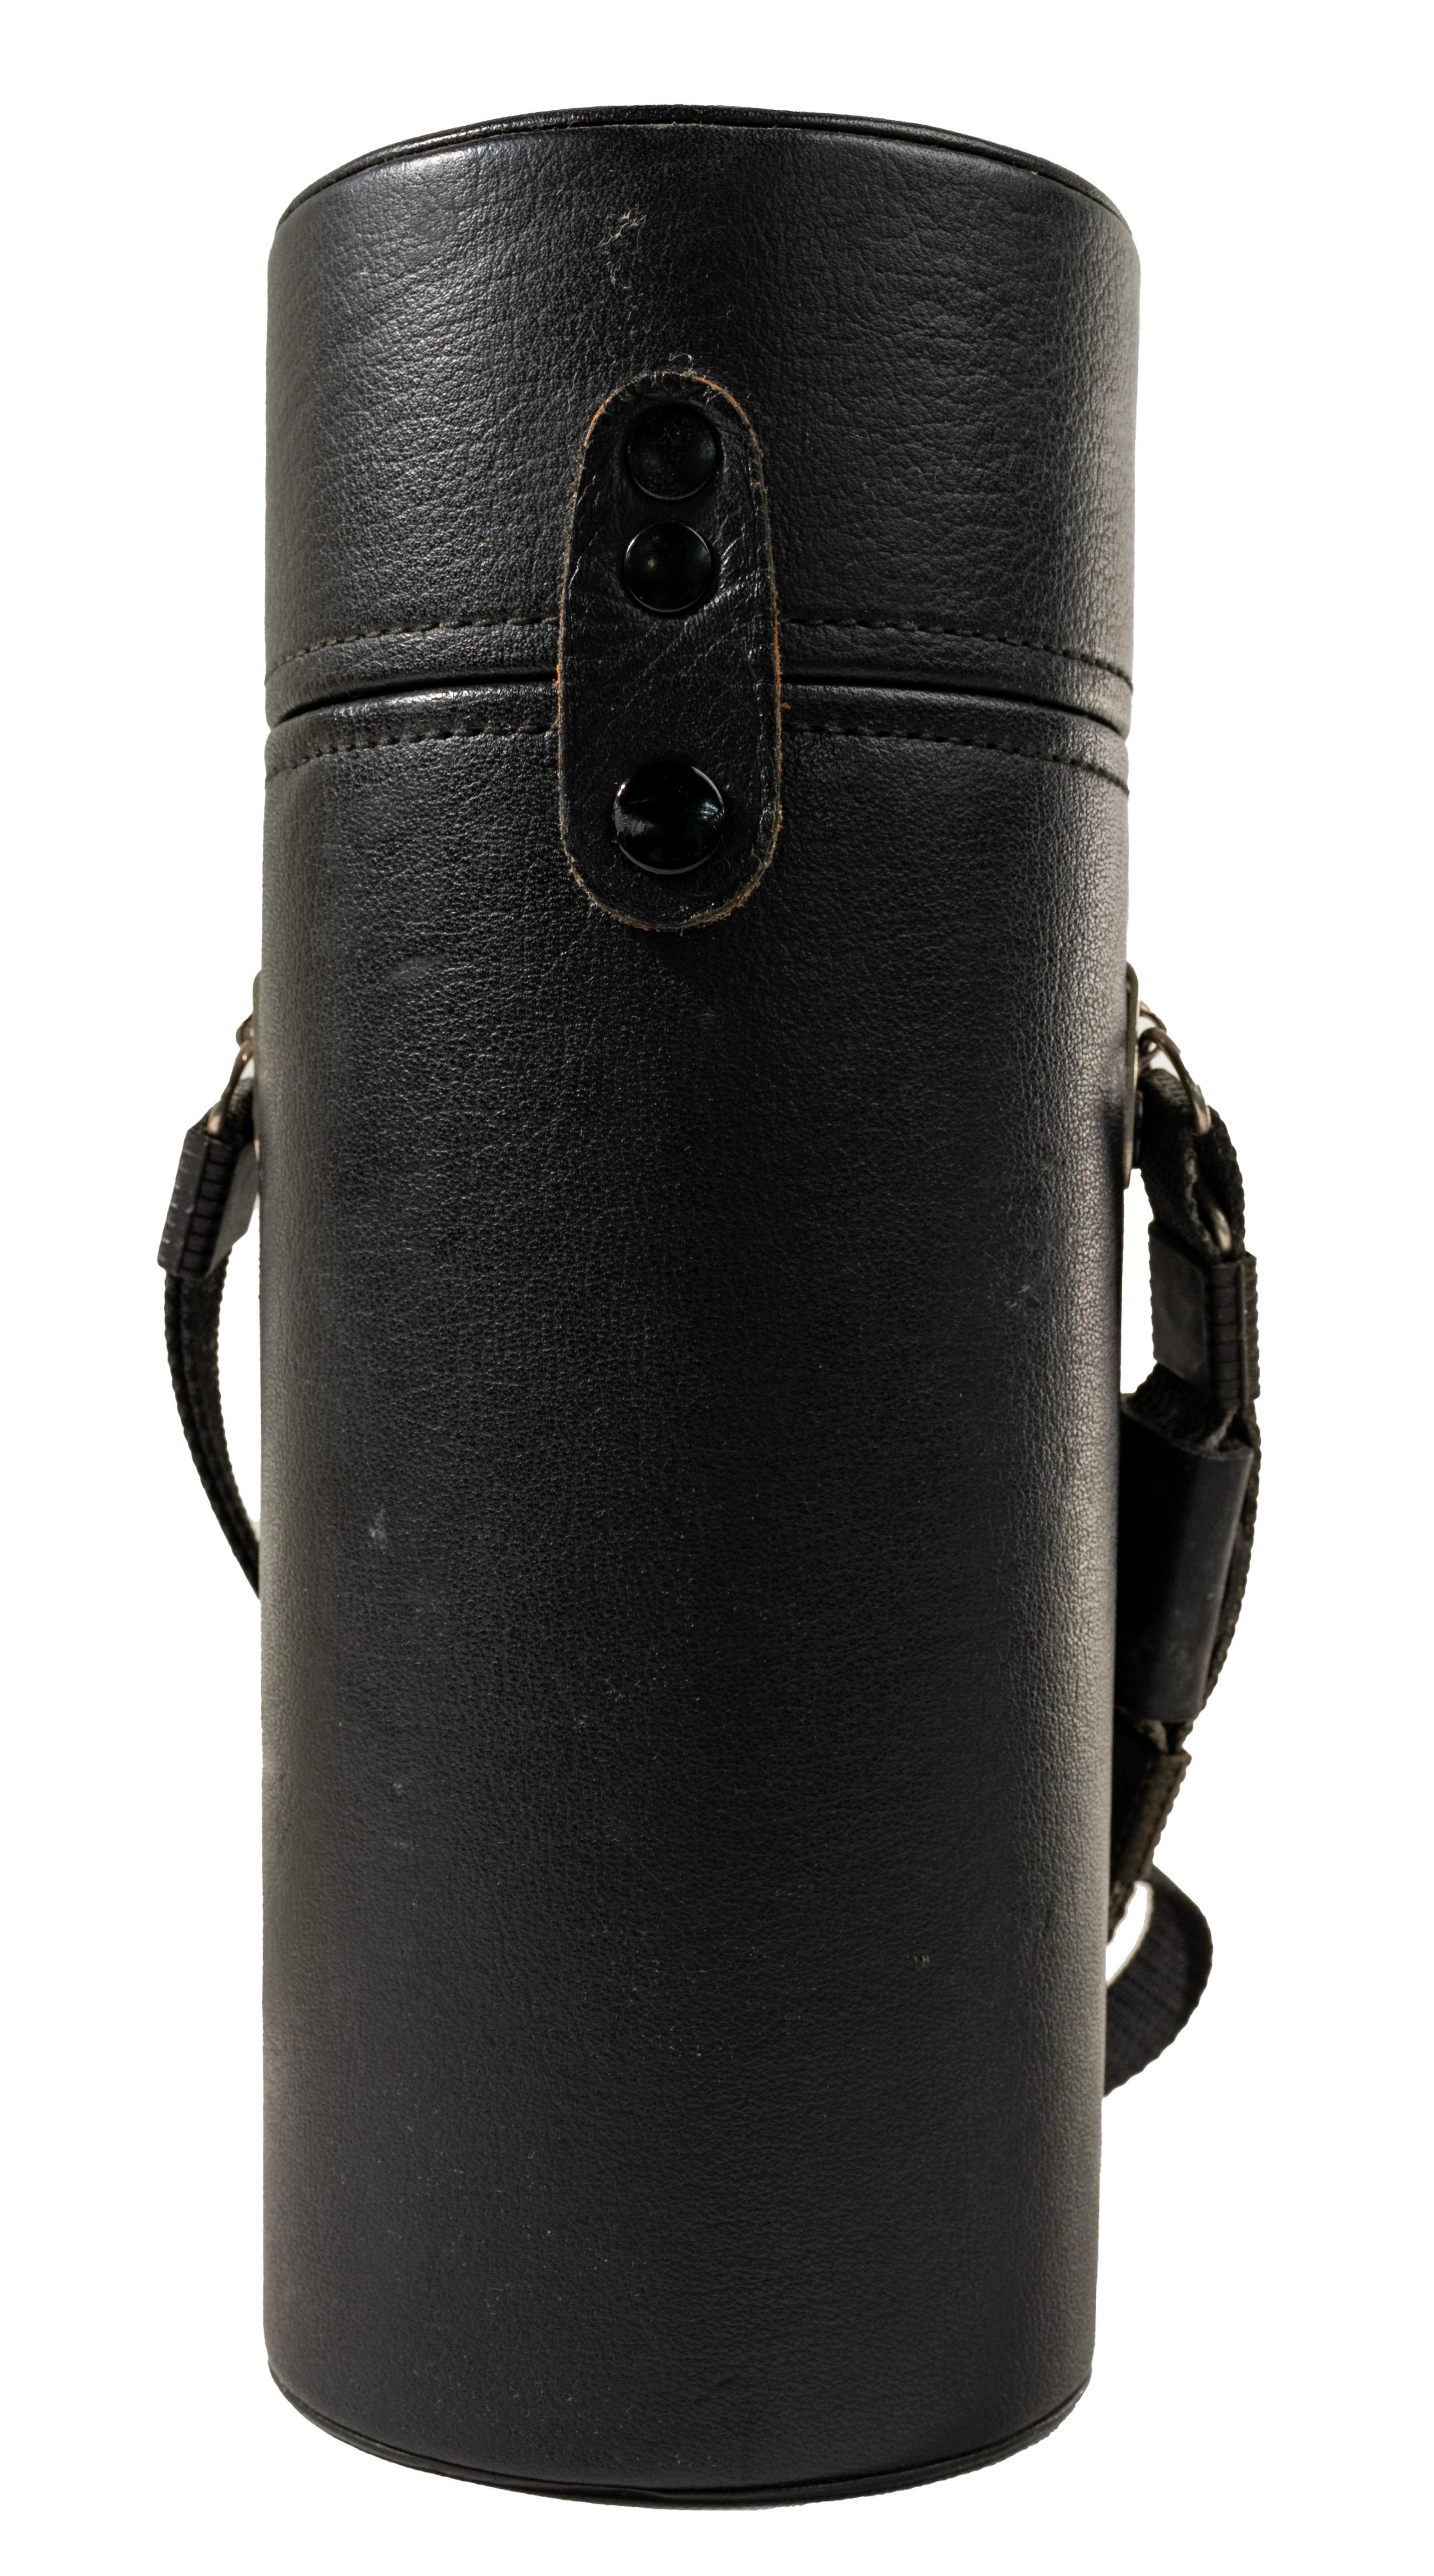 Leitz Wetzlar TELYT-R 1:4/250mm Lens with Box and Leather Case